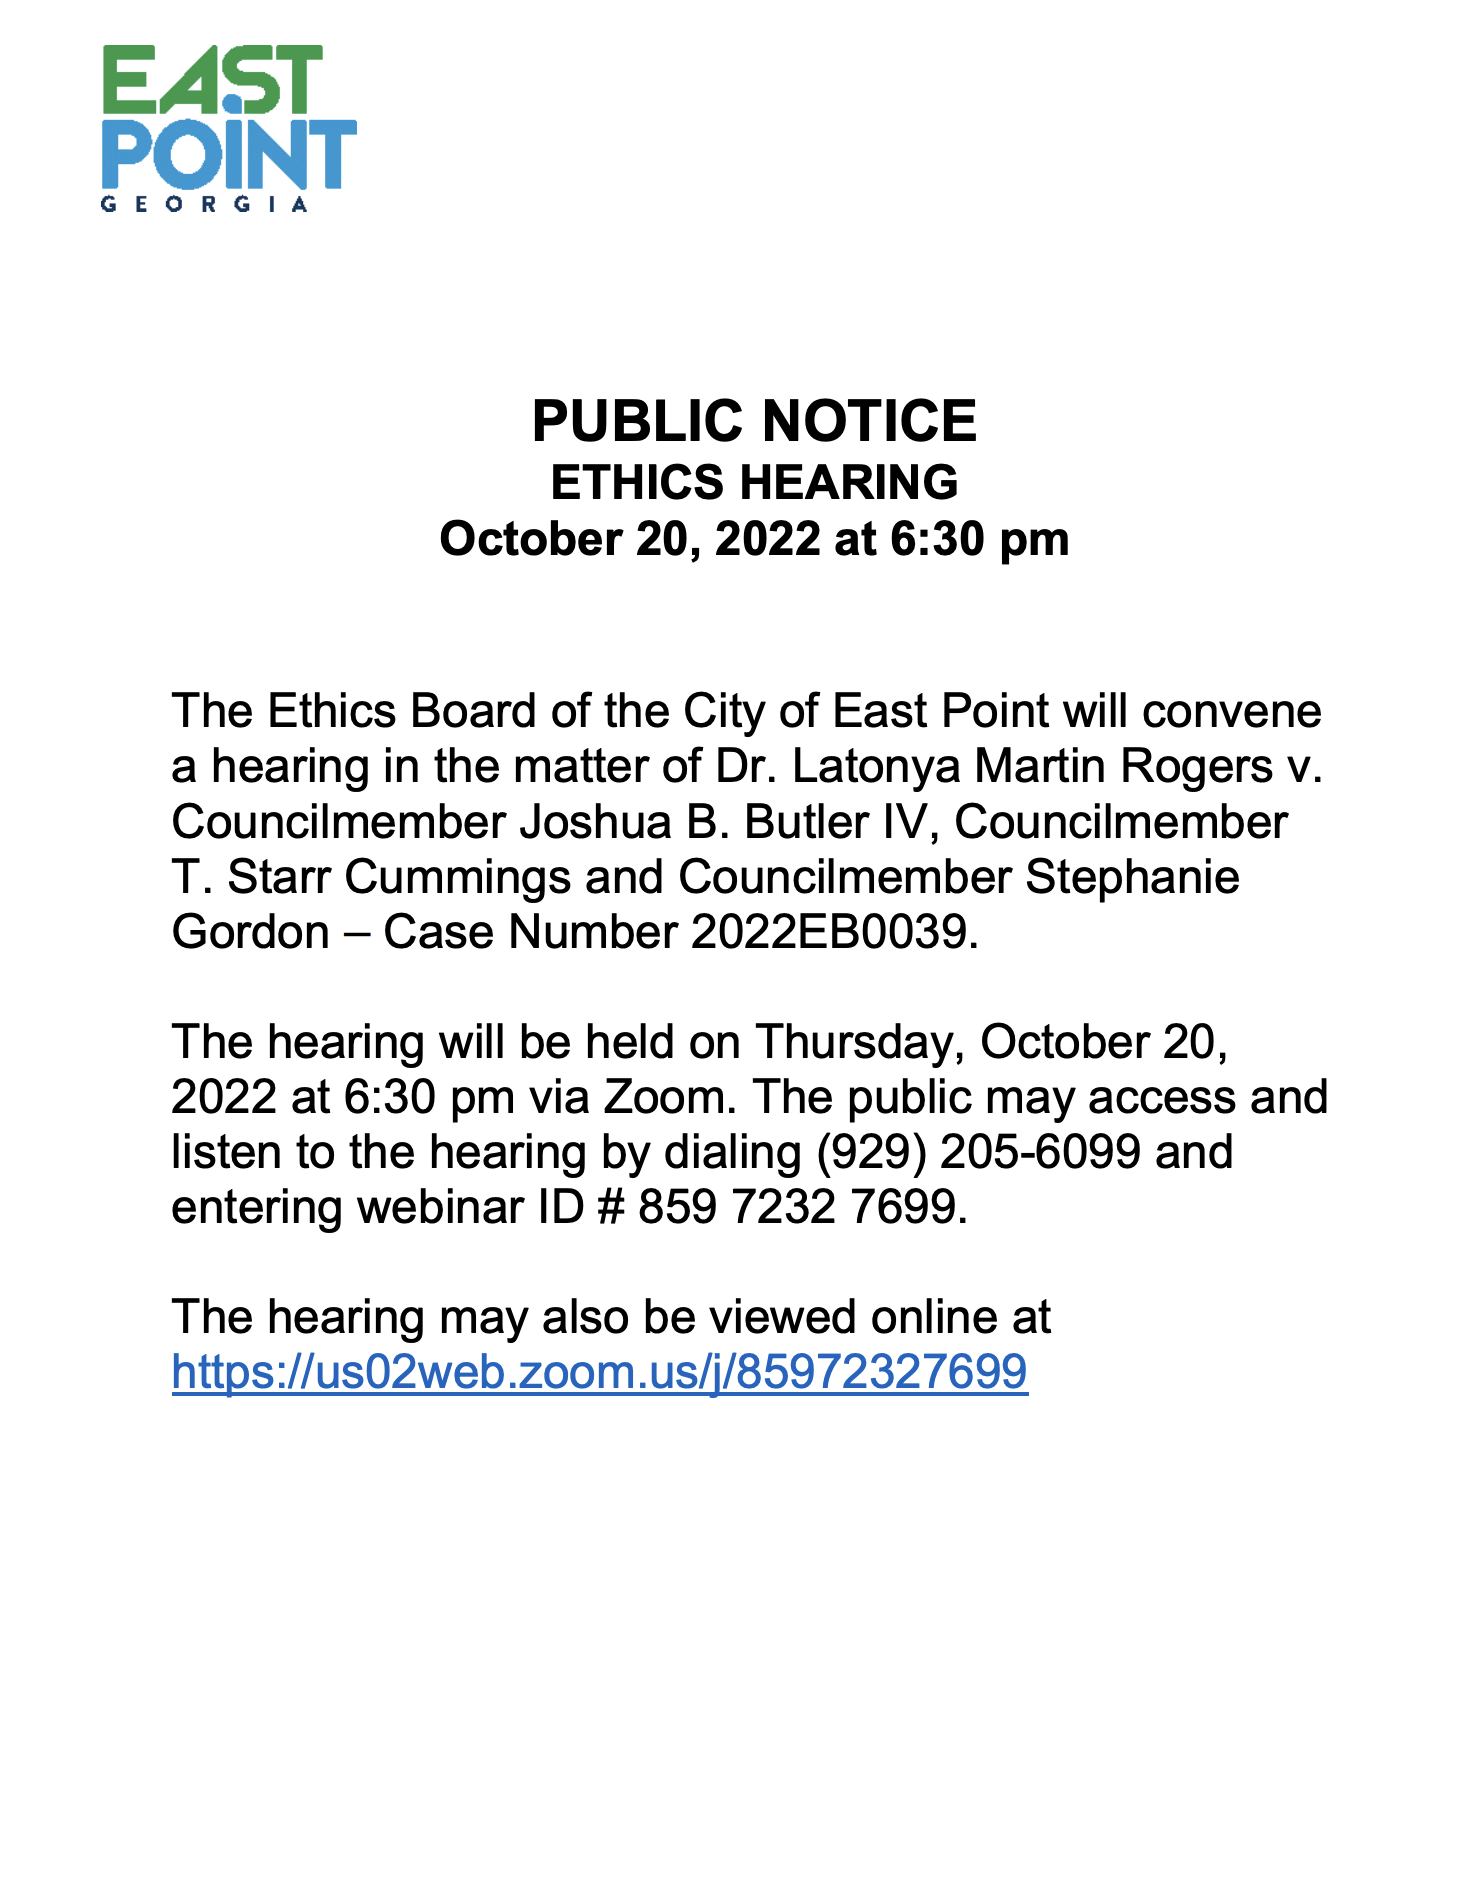 Ethics Hearing